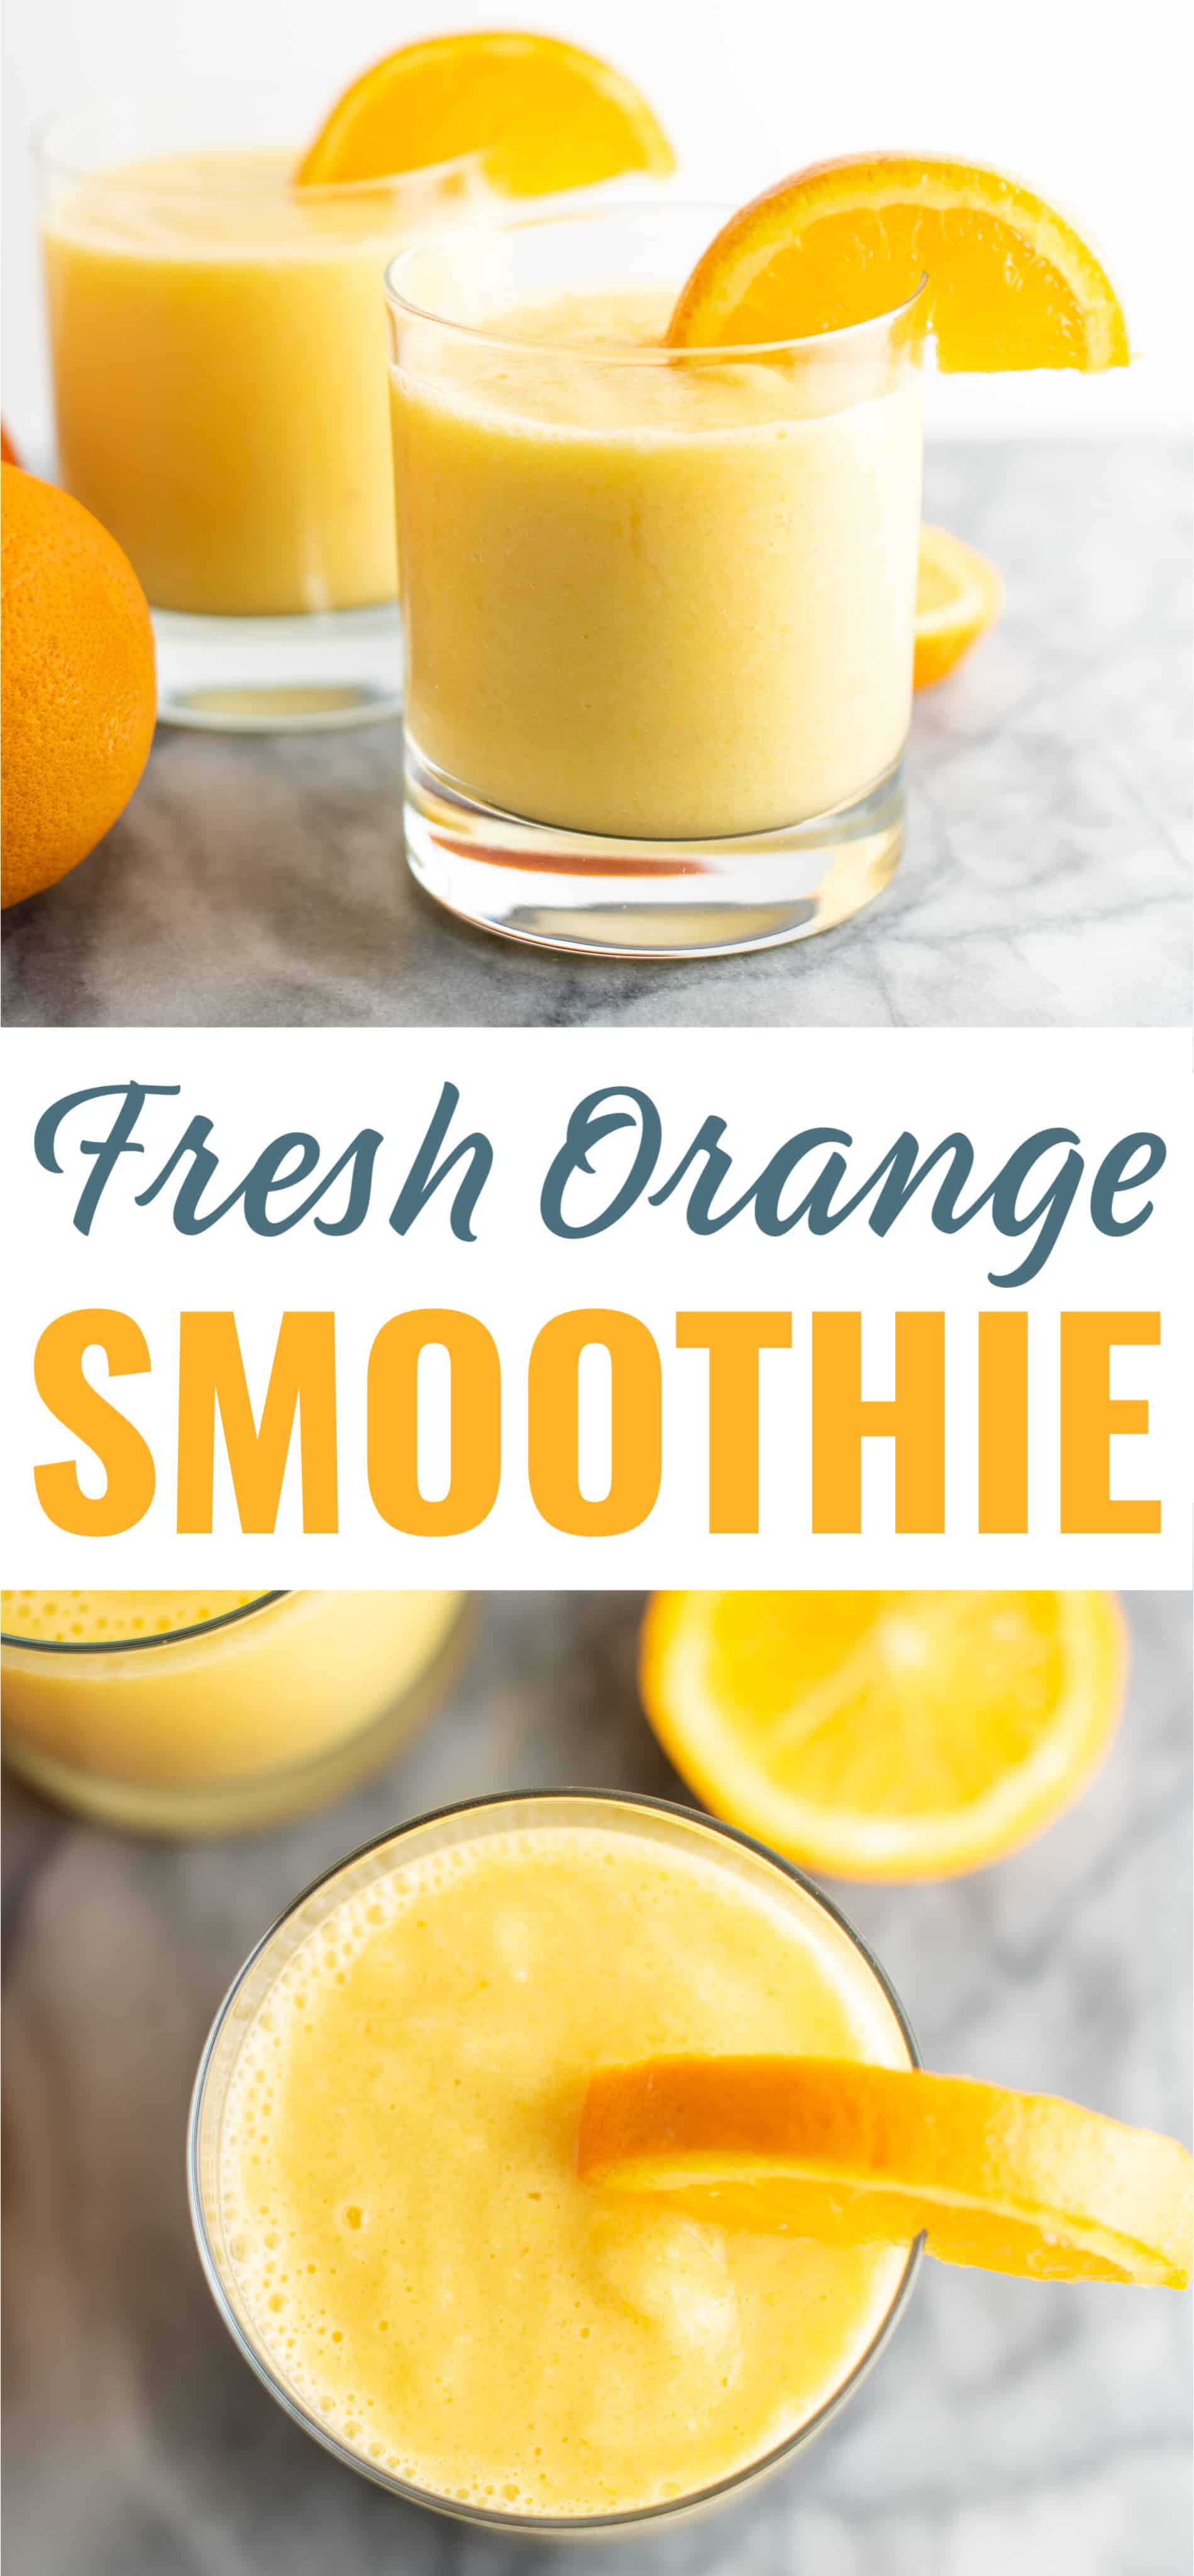 orange smoothie pictures with the text "fresh orange smoothie"